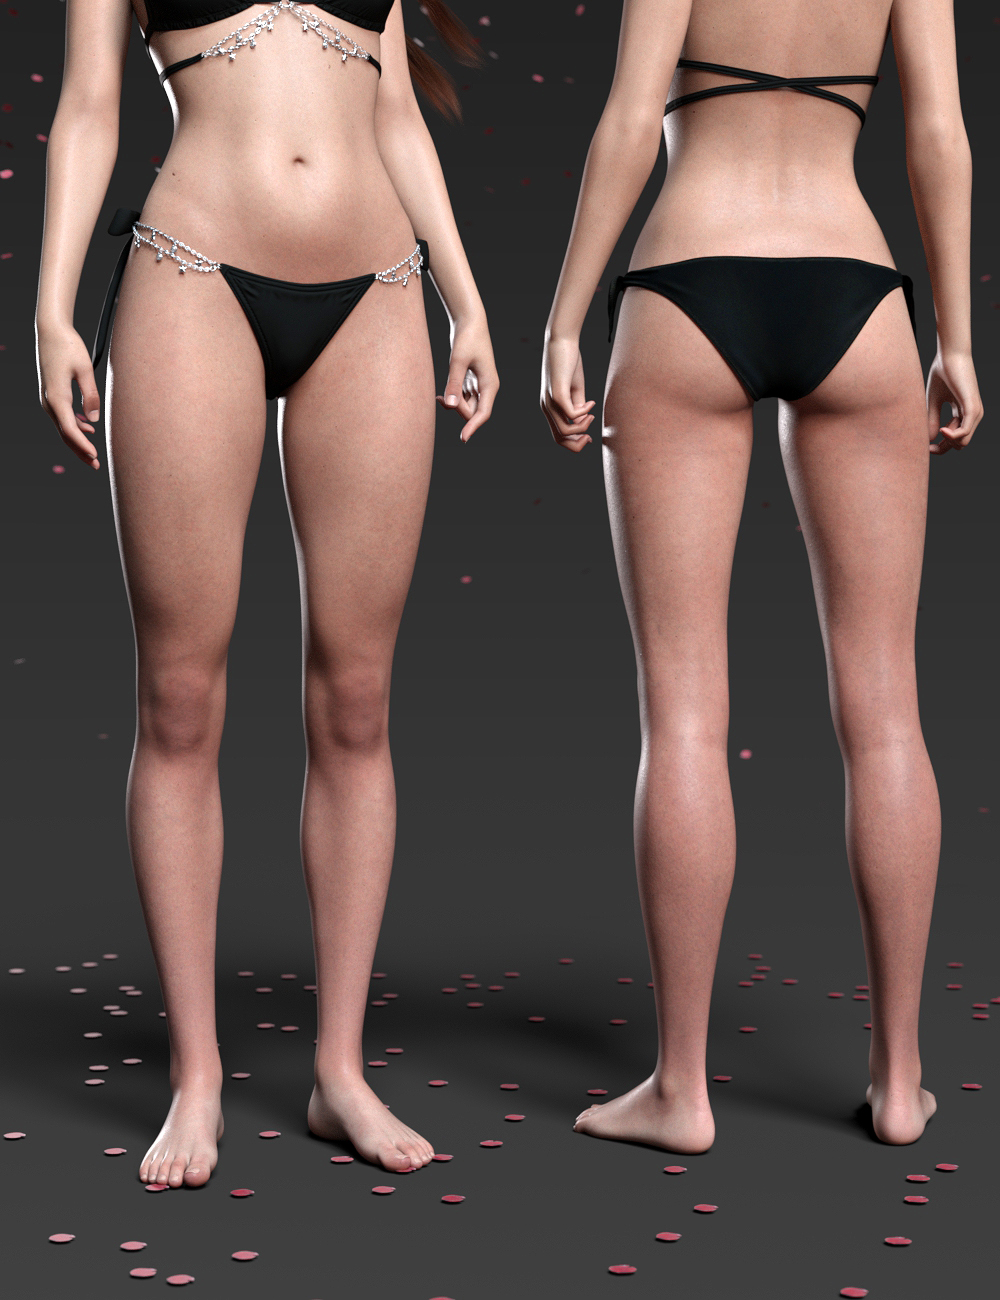 Tarni for Genesis 8.1 Female by: Saiyaness, 3D Models by Daz 3D